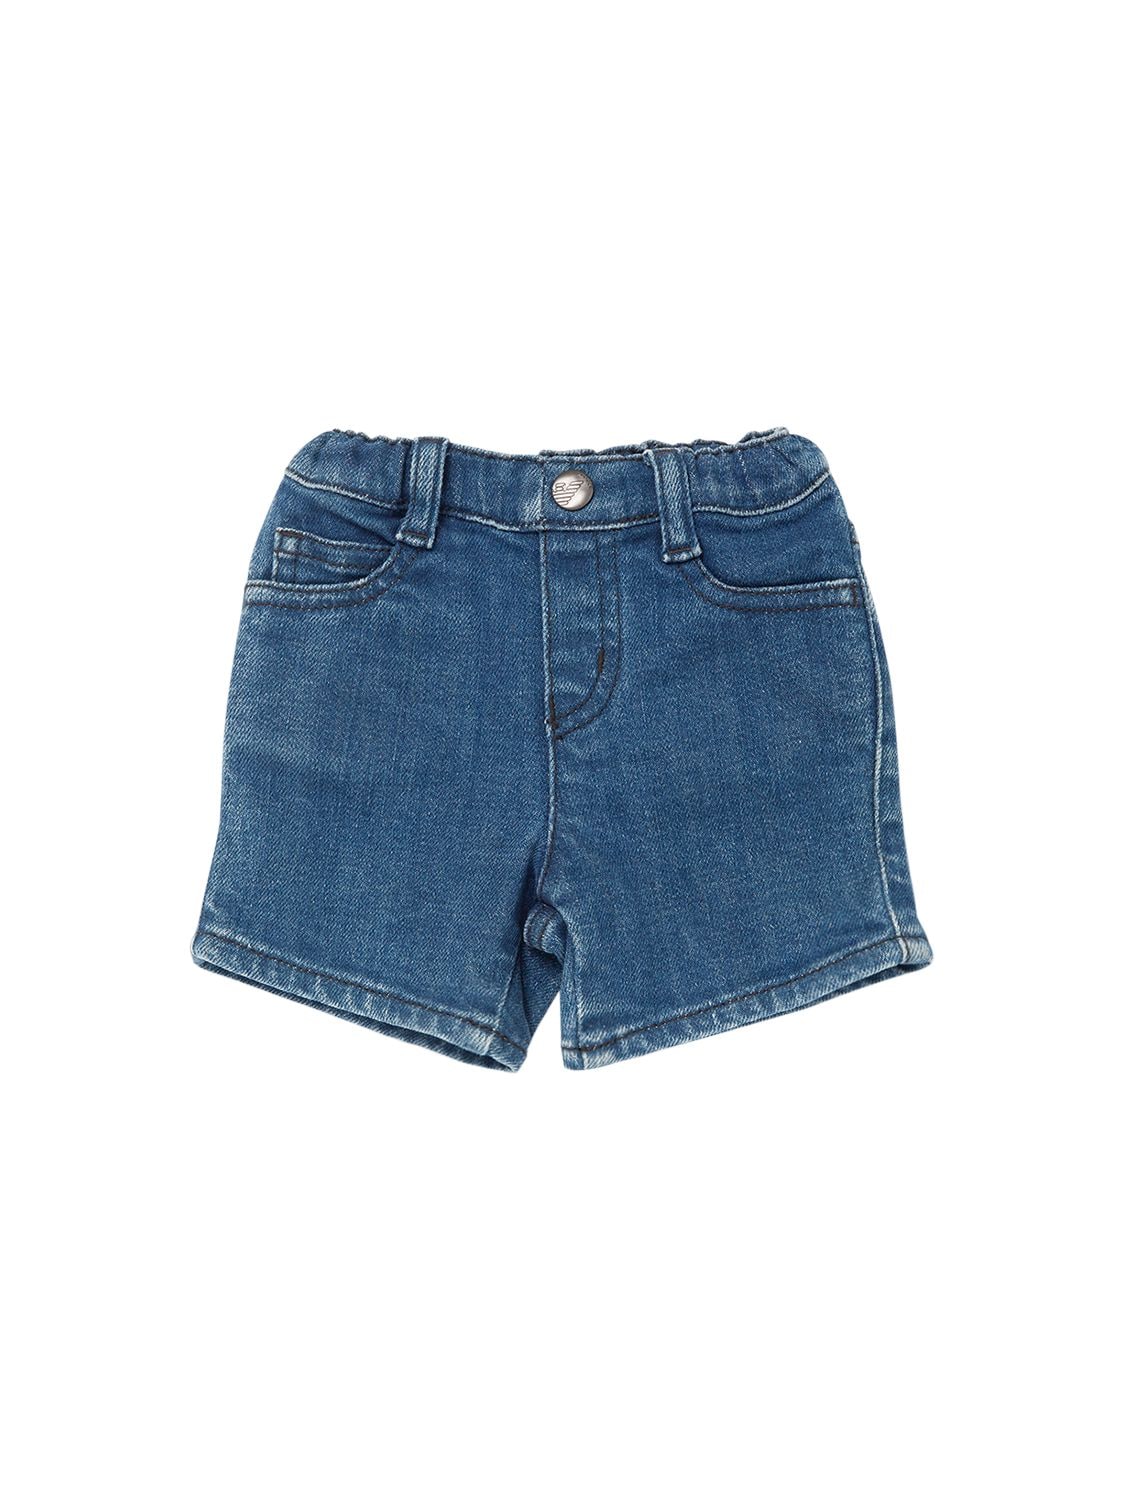 Image of Cotton Denim Bermuda Shorts